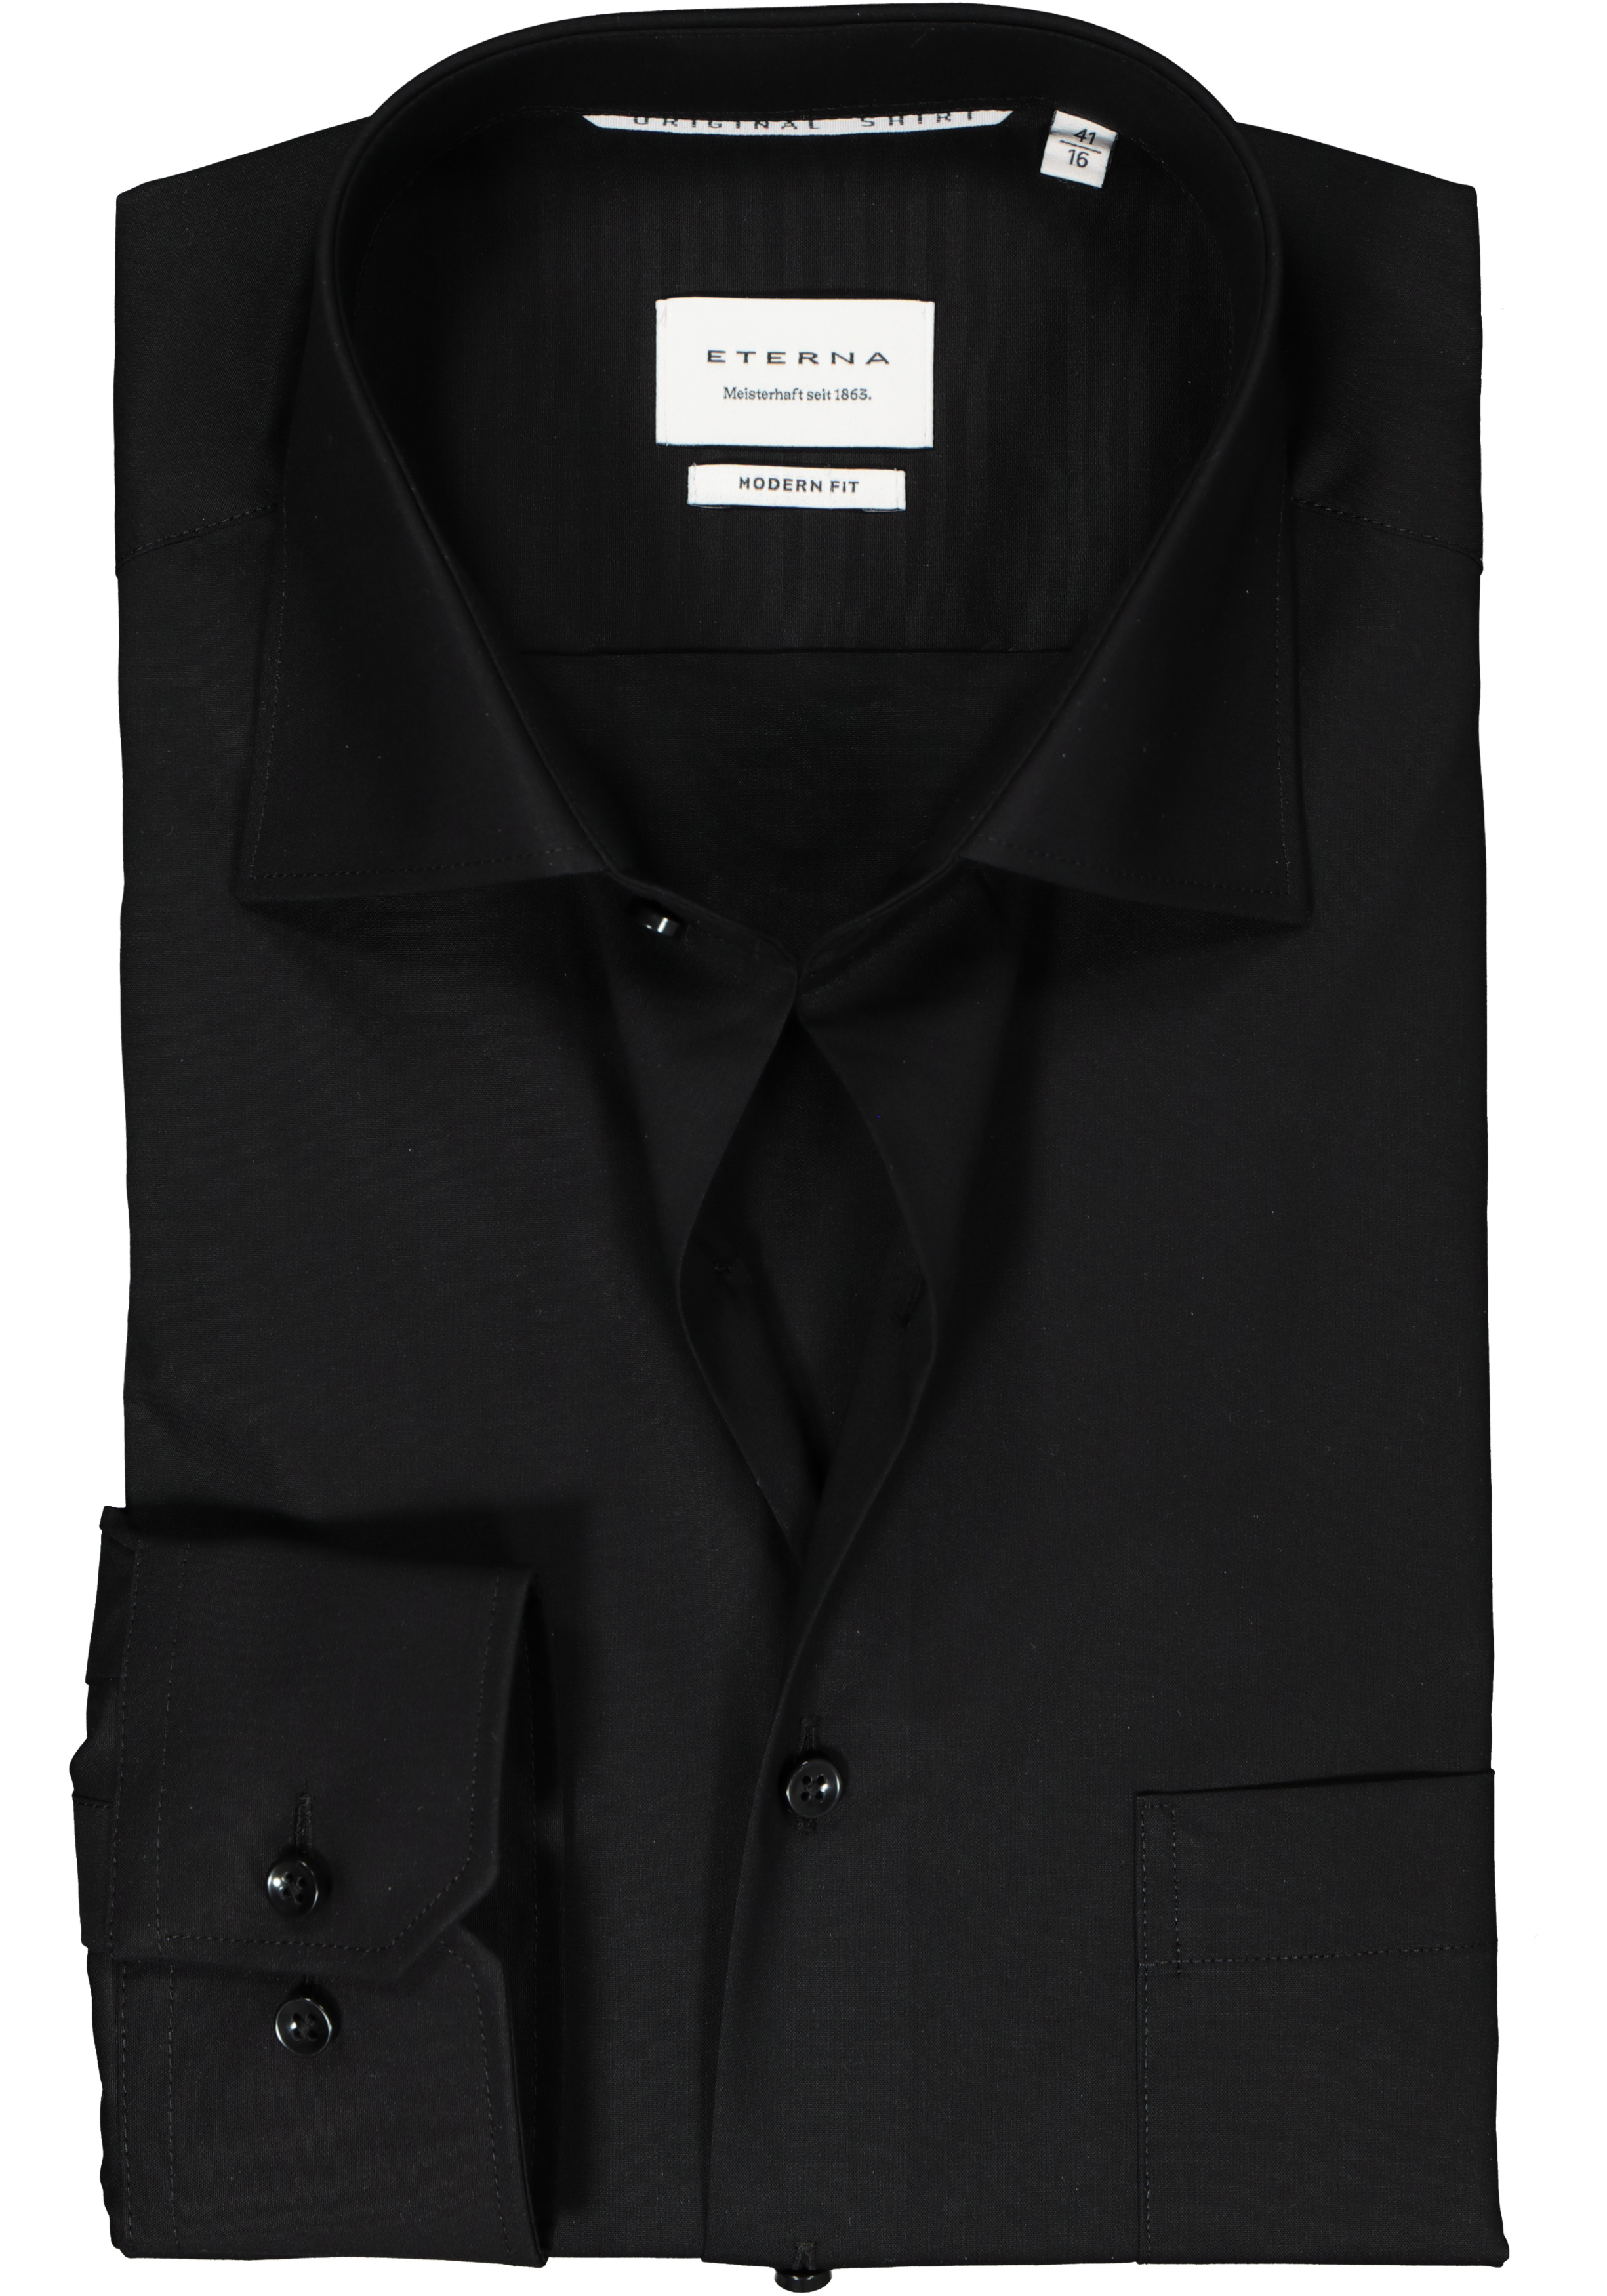 ETERNA modern fit overhemd mouwlengte 7, popeline, zwart